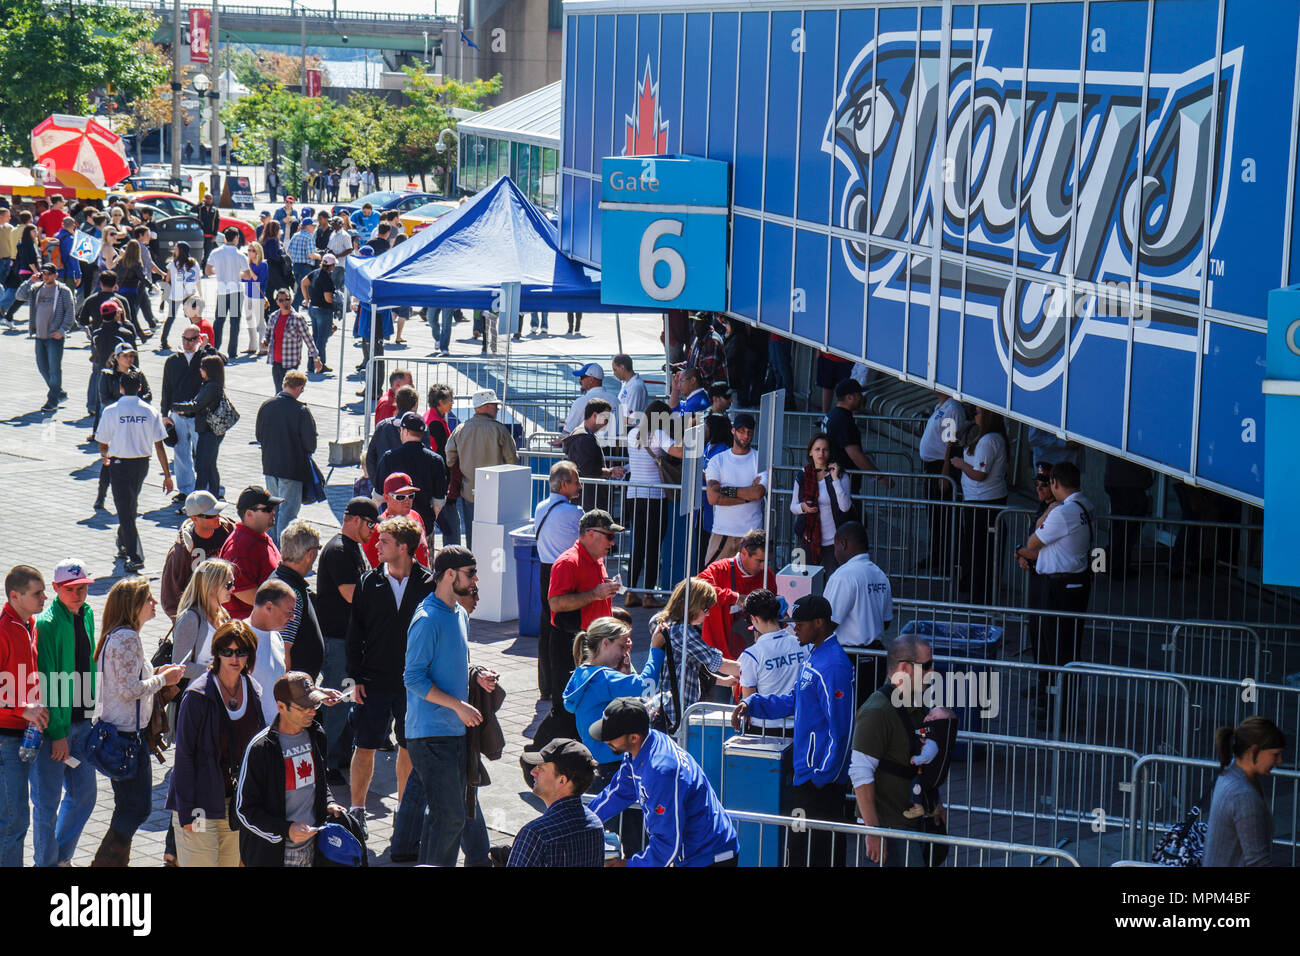 Toronto Canada,Bremner Boulevard,Rogers Centre,center,Blue Jays Major League Baseball teamal sports,outside stadium,game day,crowd,arriving fans,Gate Stock Photo